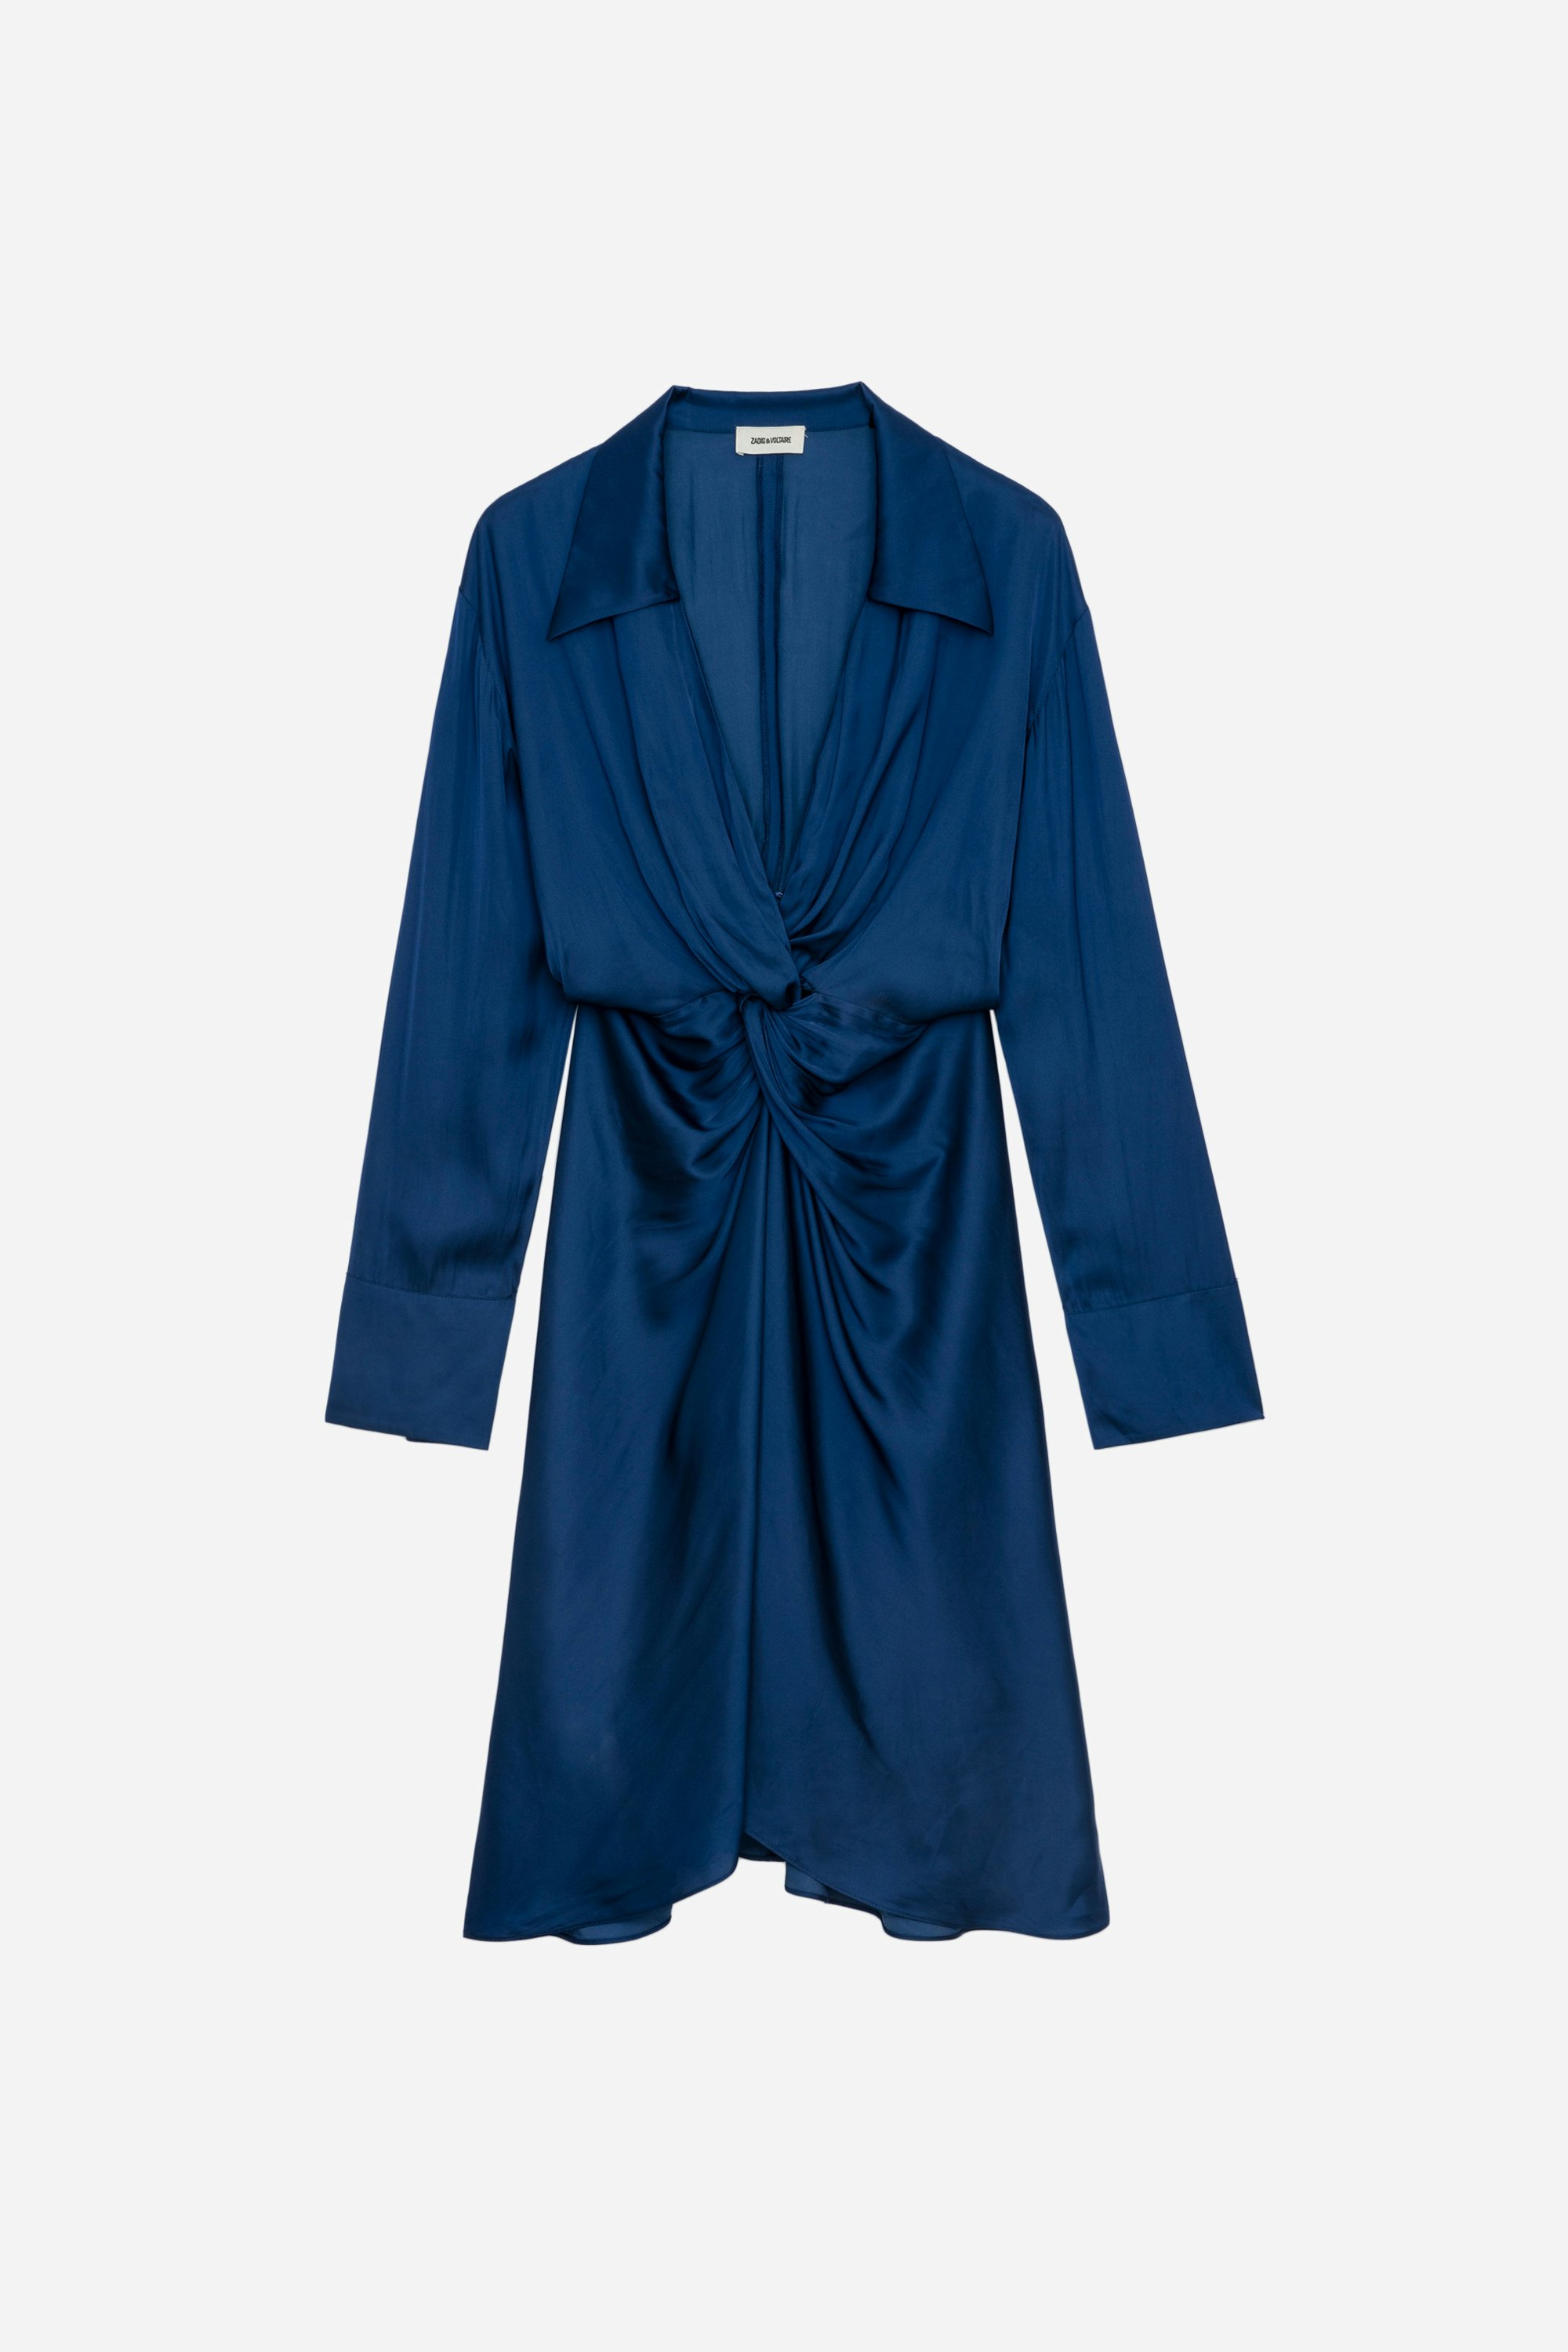 Rozo Satin Dress Women’s royal blue draped satin midi dress with asymmetric sleeves.